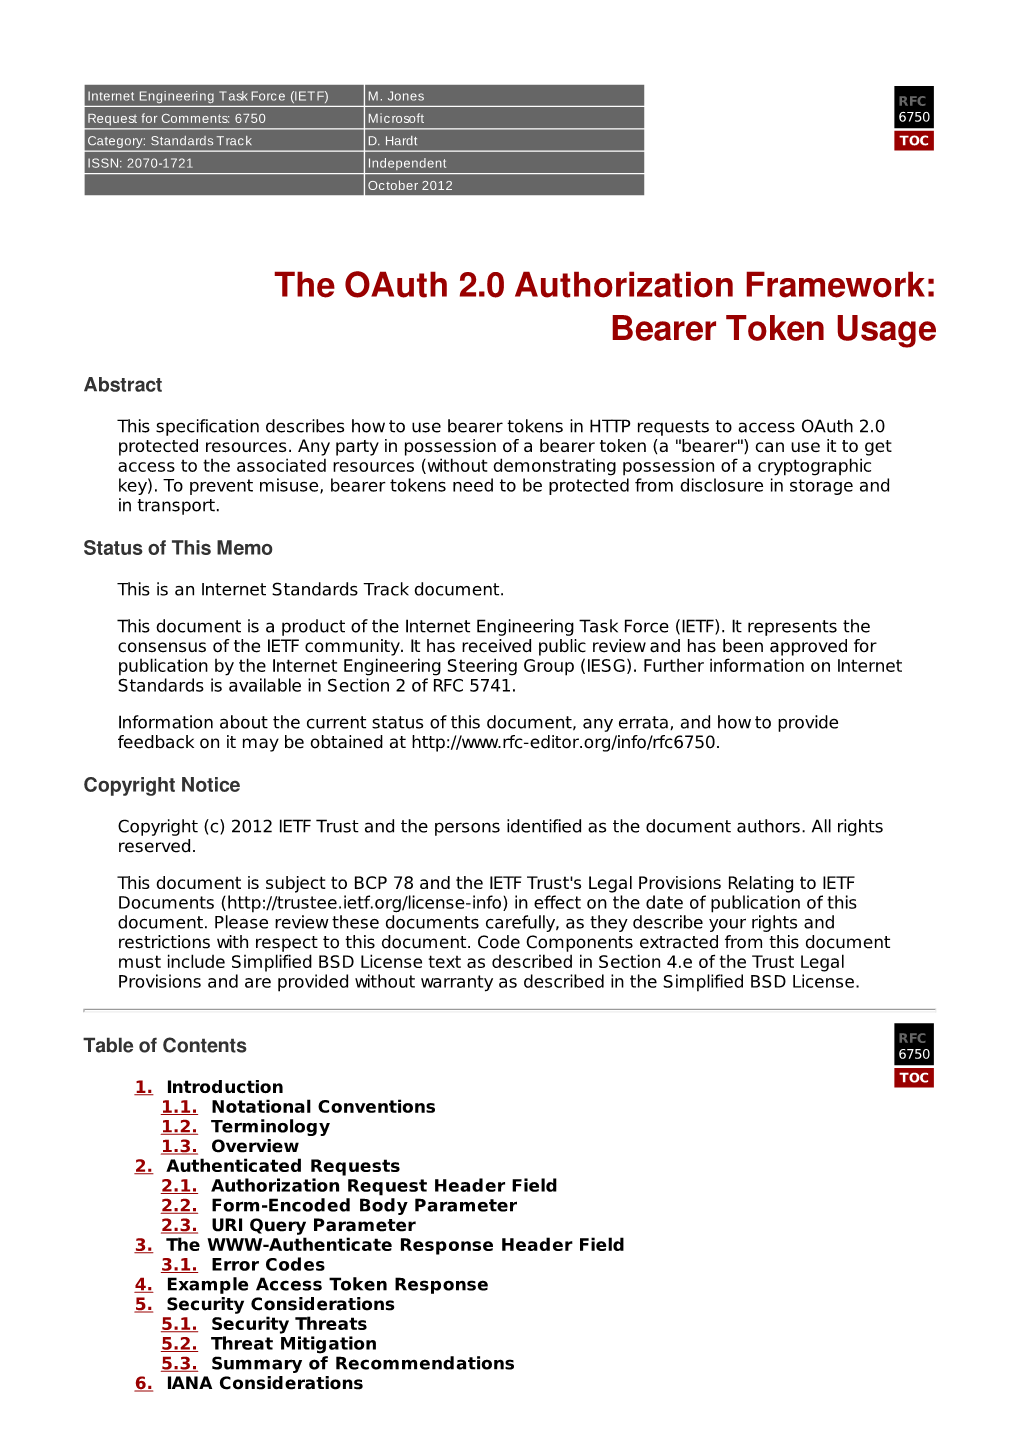 The Oauth 2.0 Authorization Framework: Bearer Token Usage